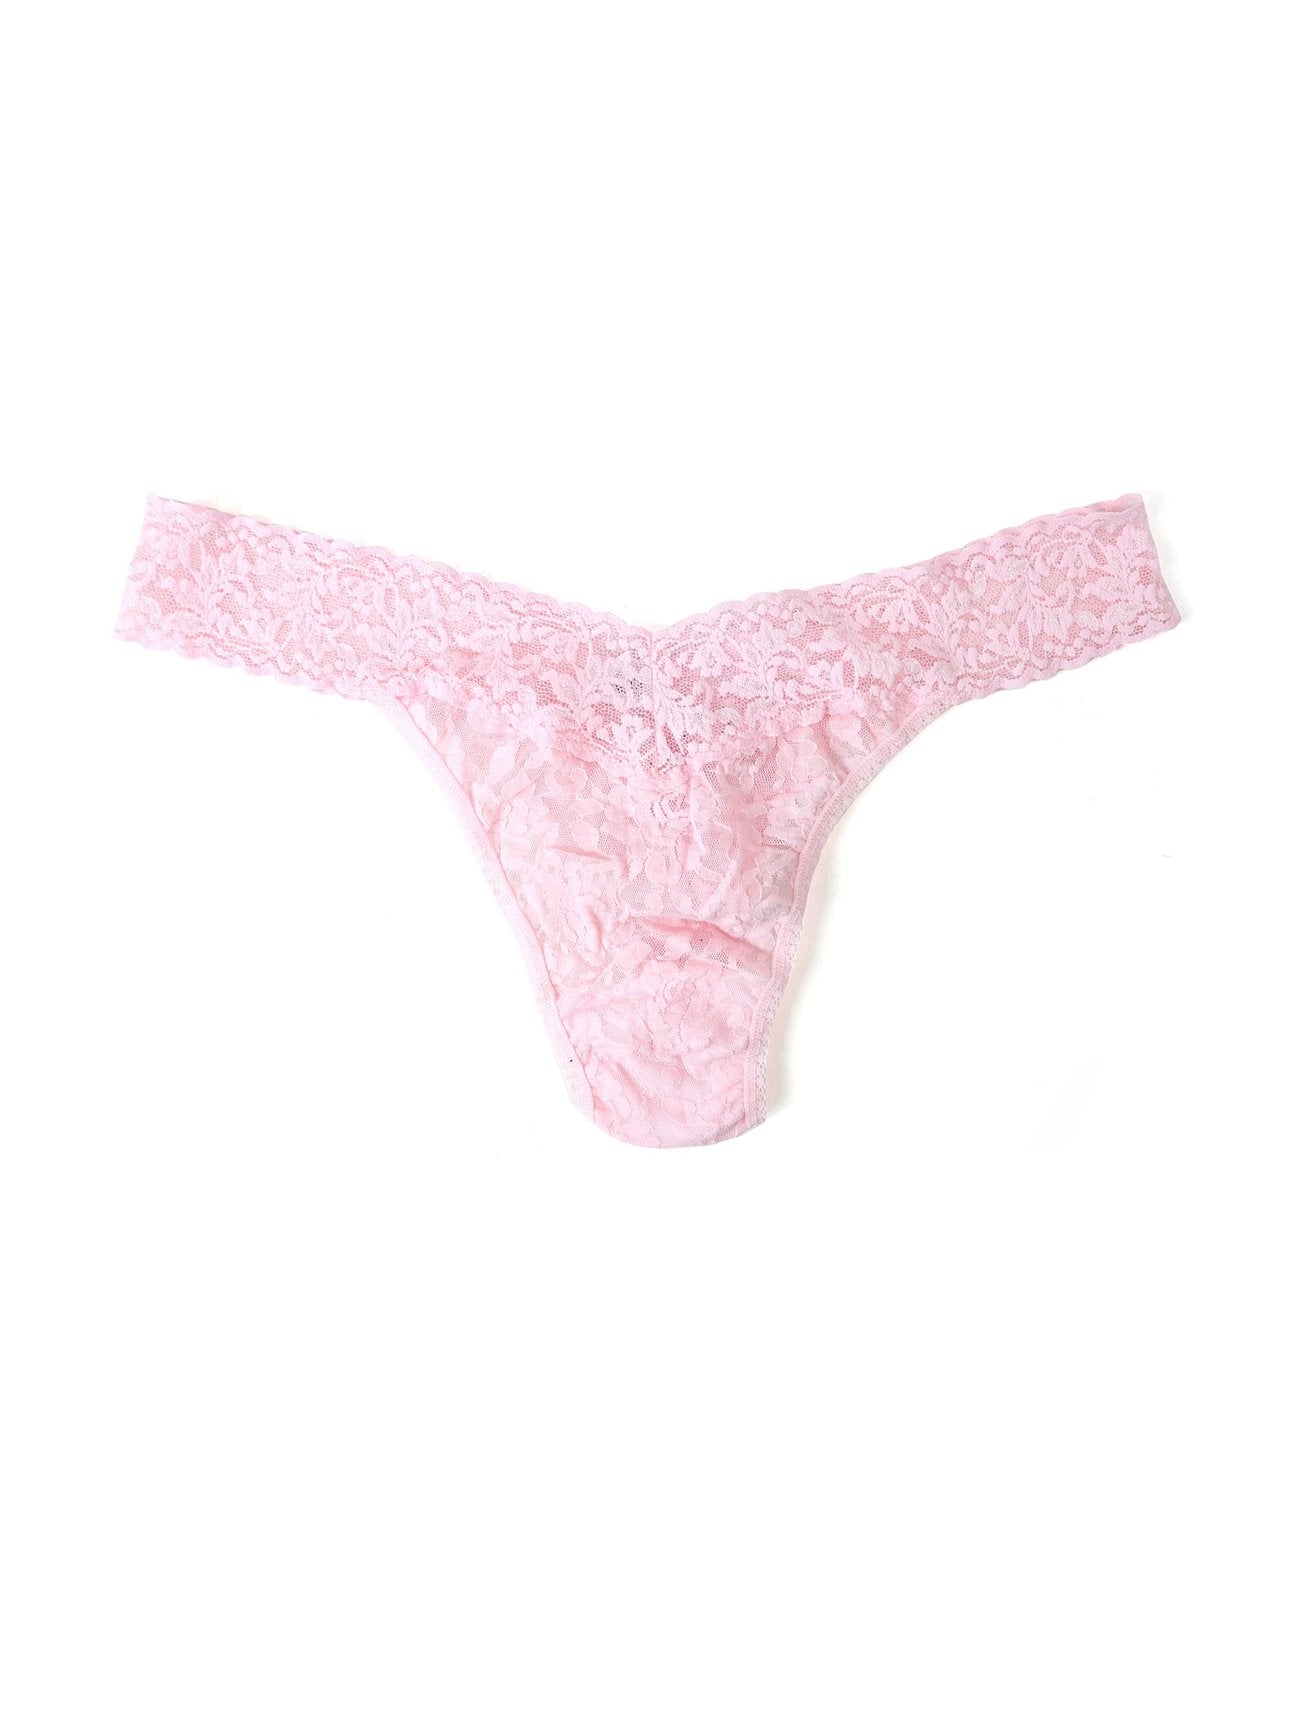 Plus Size Signature Lace Original Rise Thong - Bliss Pink